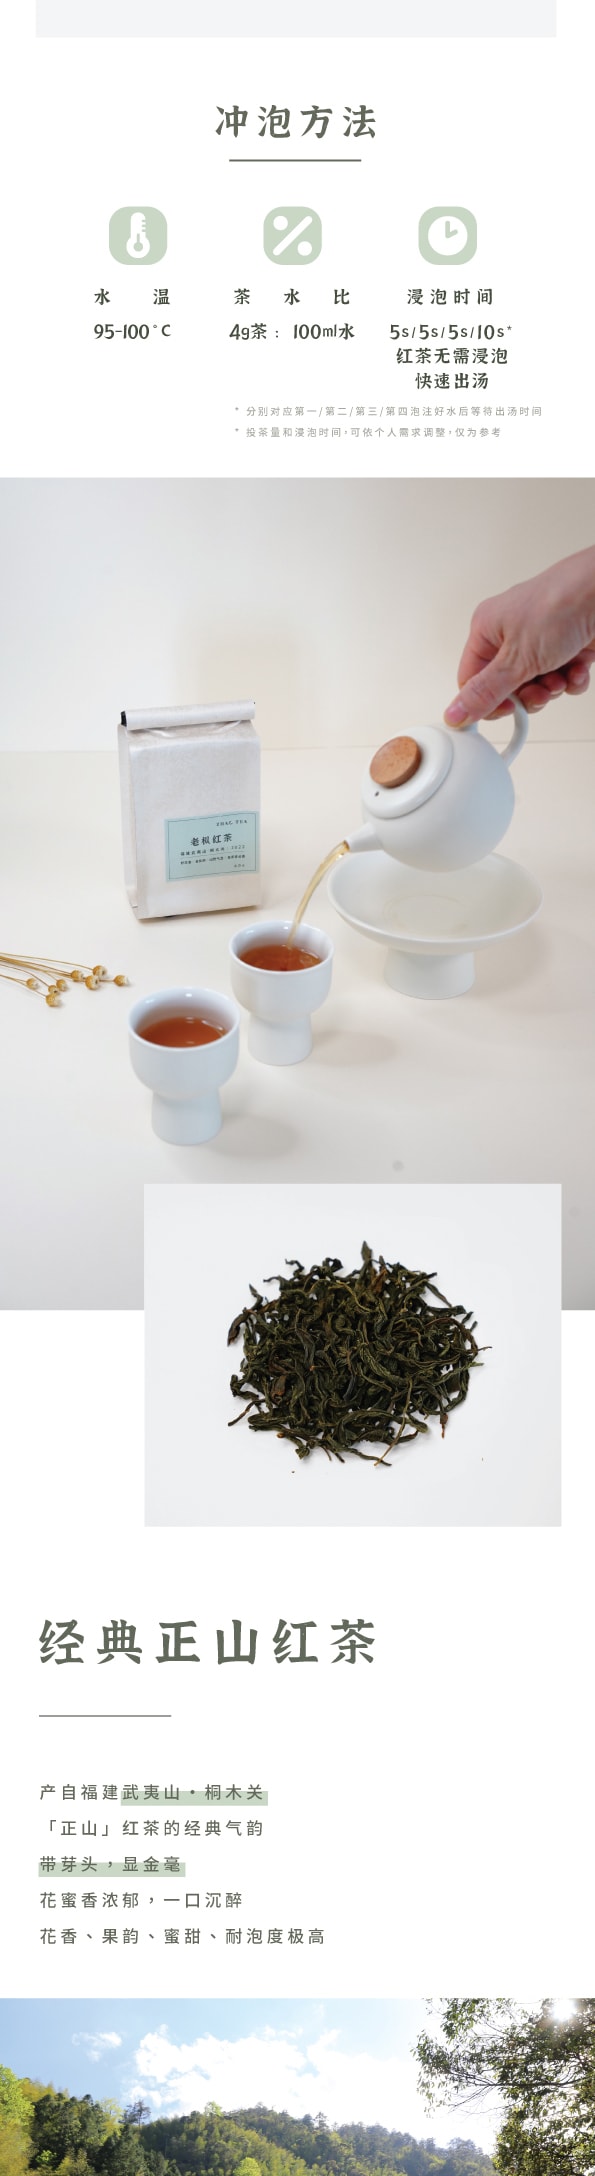 ZhaoTea 紅茶品嚐 老塔紅茶 經典正山紅茶 花香紅茶 梨山紅茶 花果蜜香 溫暖甜潤 茶葉 紅茶 20g